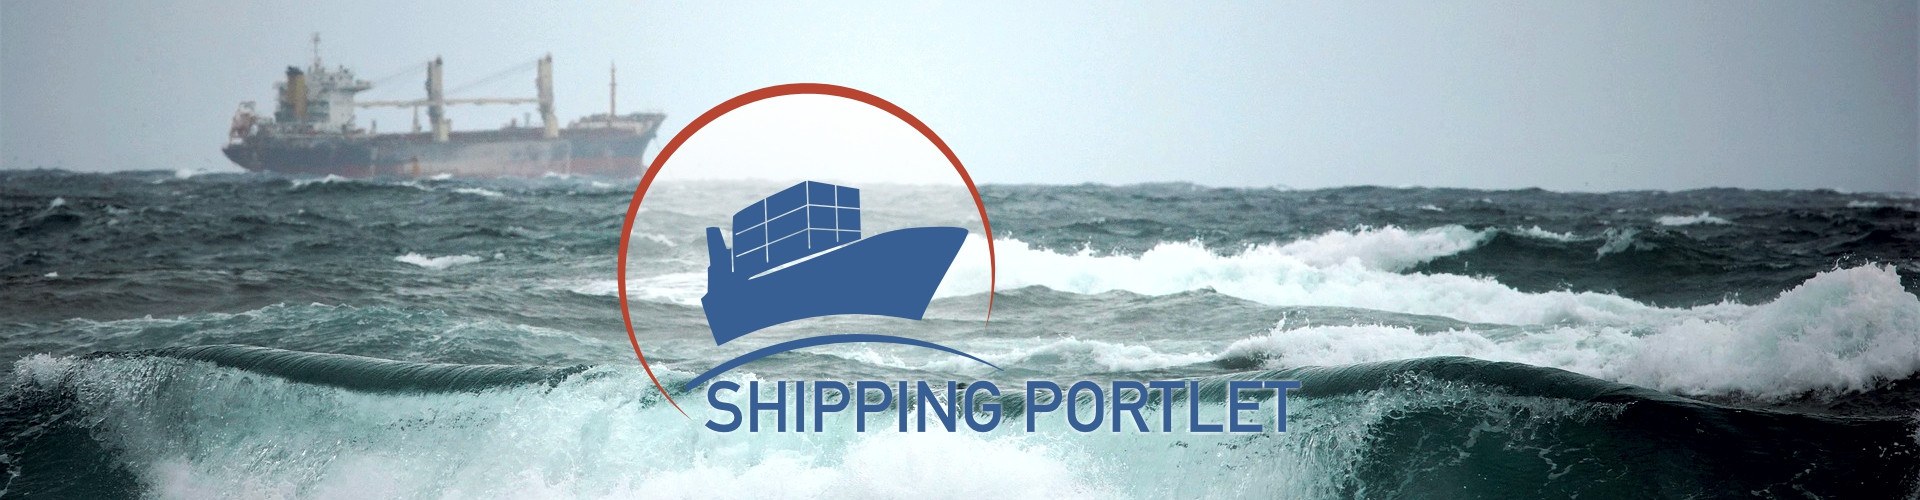 Shipping Portlet - Ship sailing